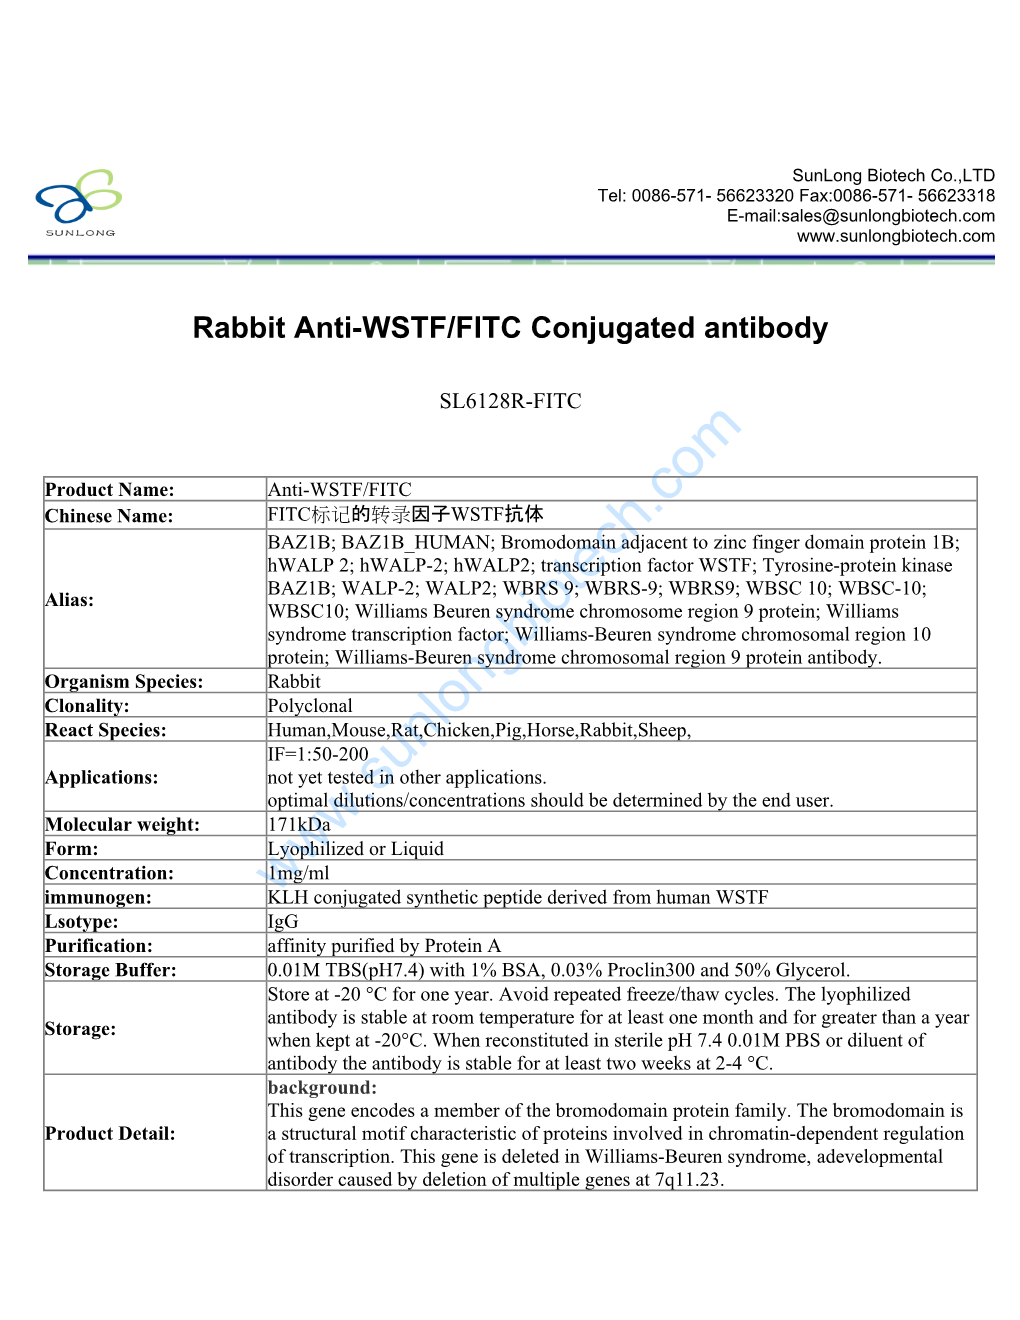 Rabbit Anti-WSTF/FITC Conjugated Antibody